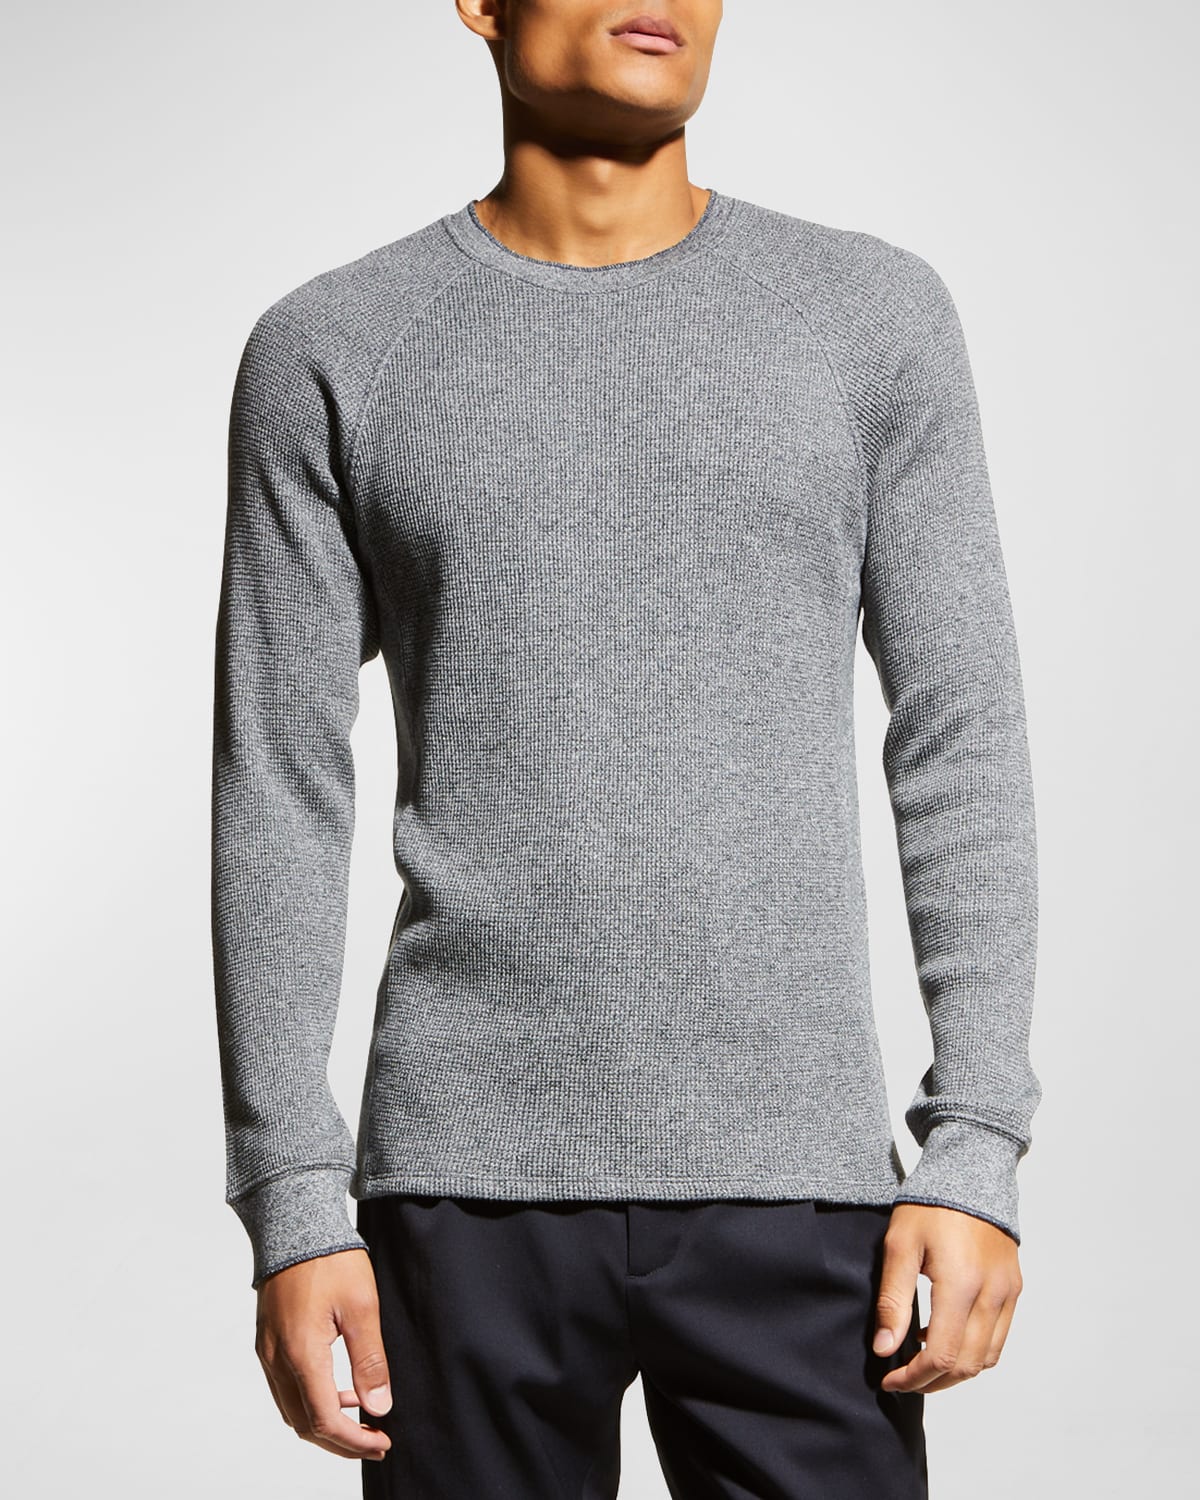 Vince Men's Mouline Thermal Sweater